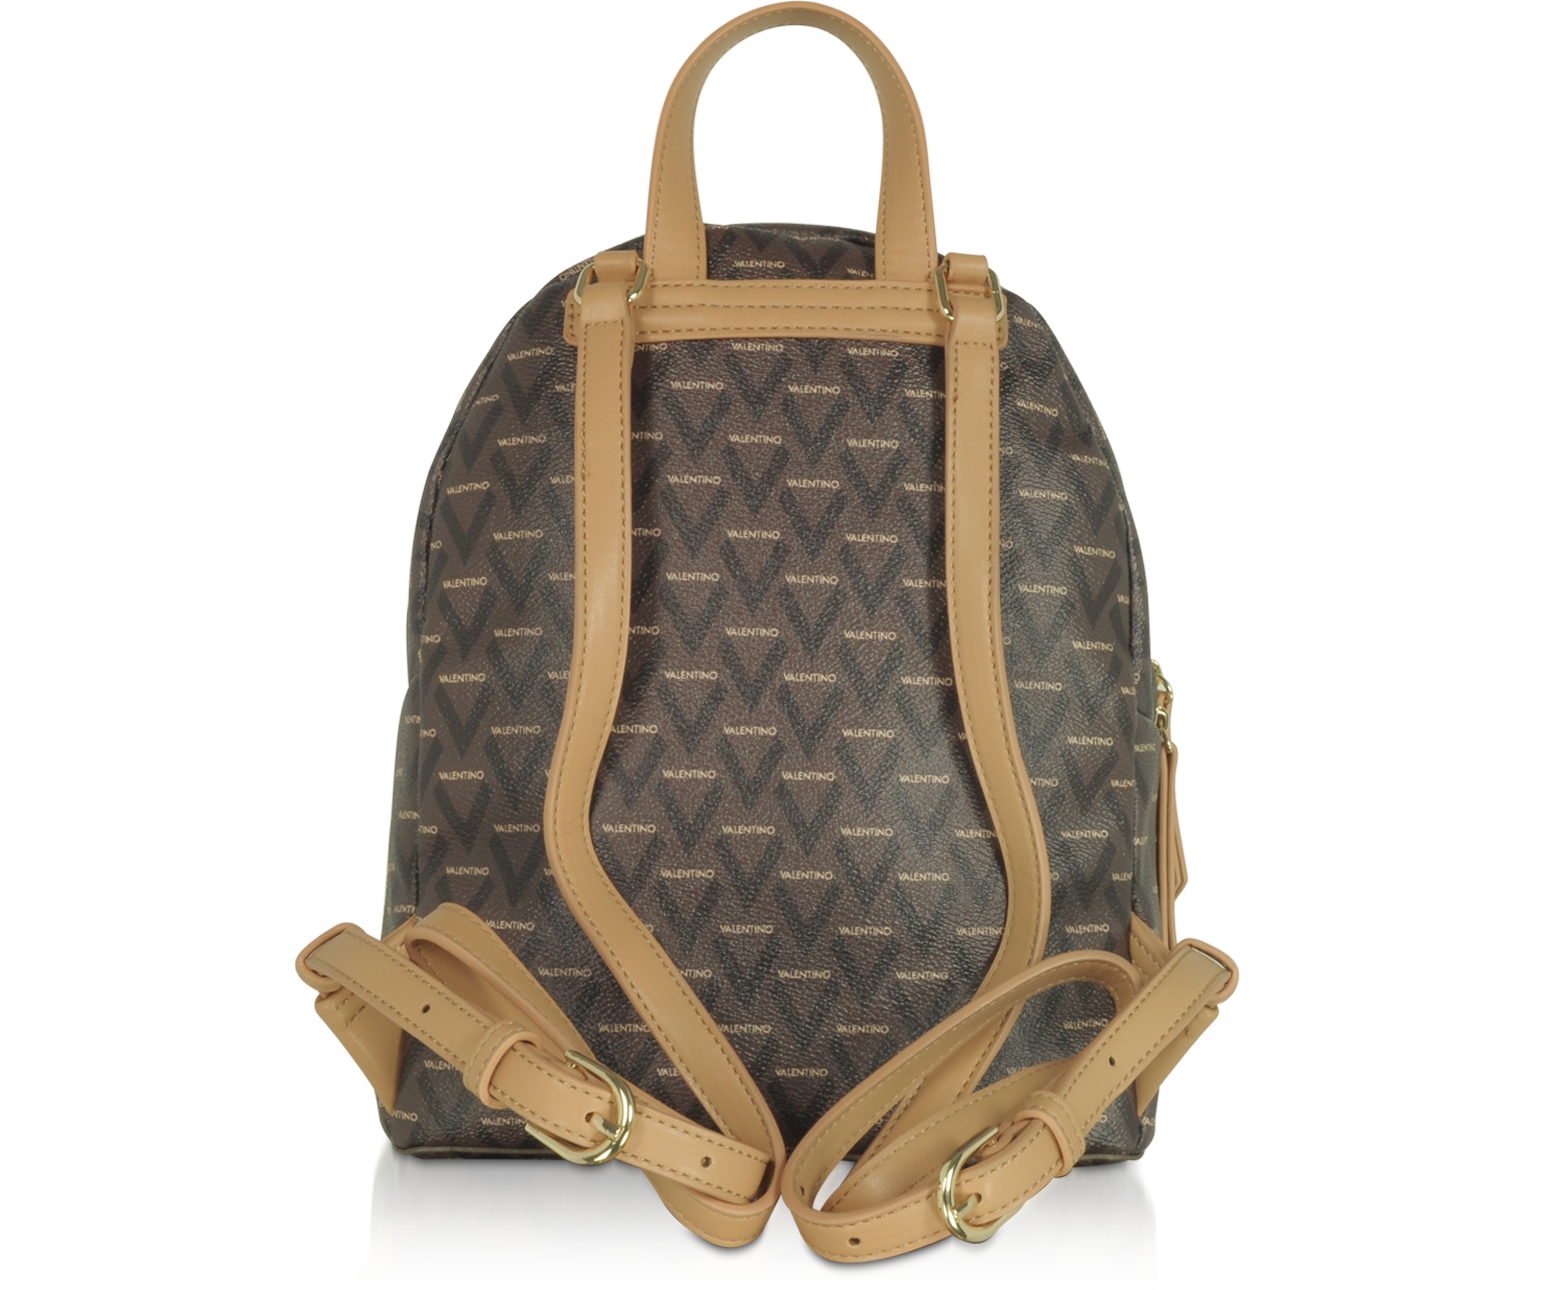 Valentino Liuto Cuoio Logo Backpack - ShopStyle